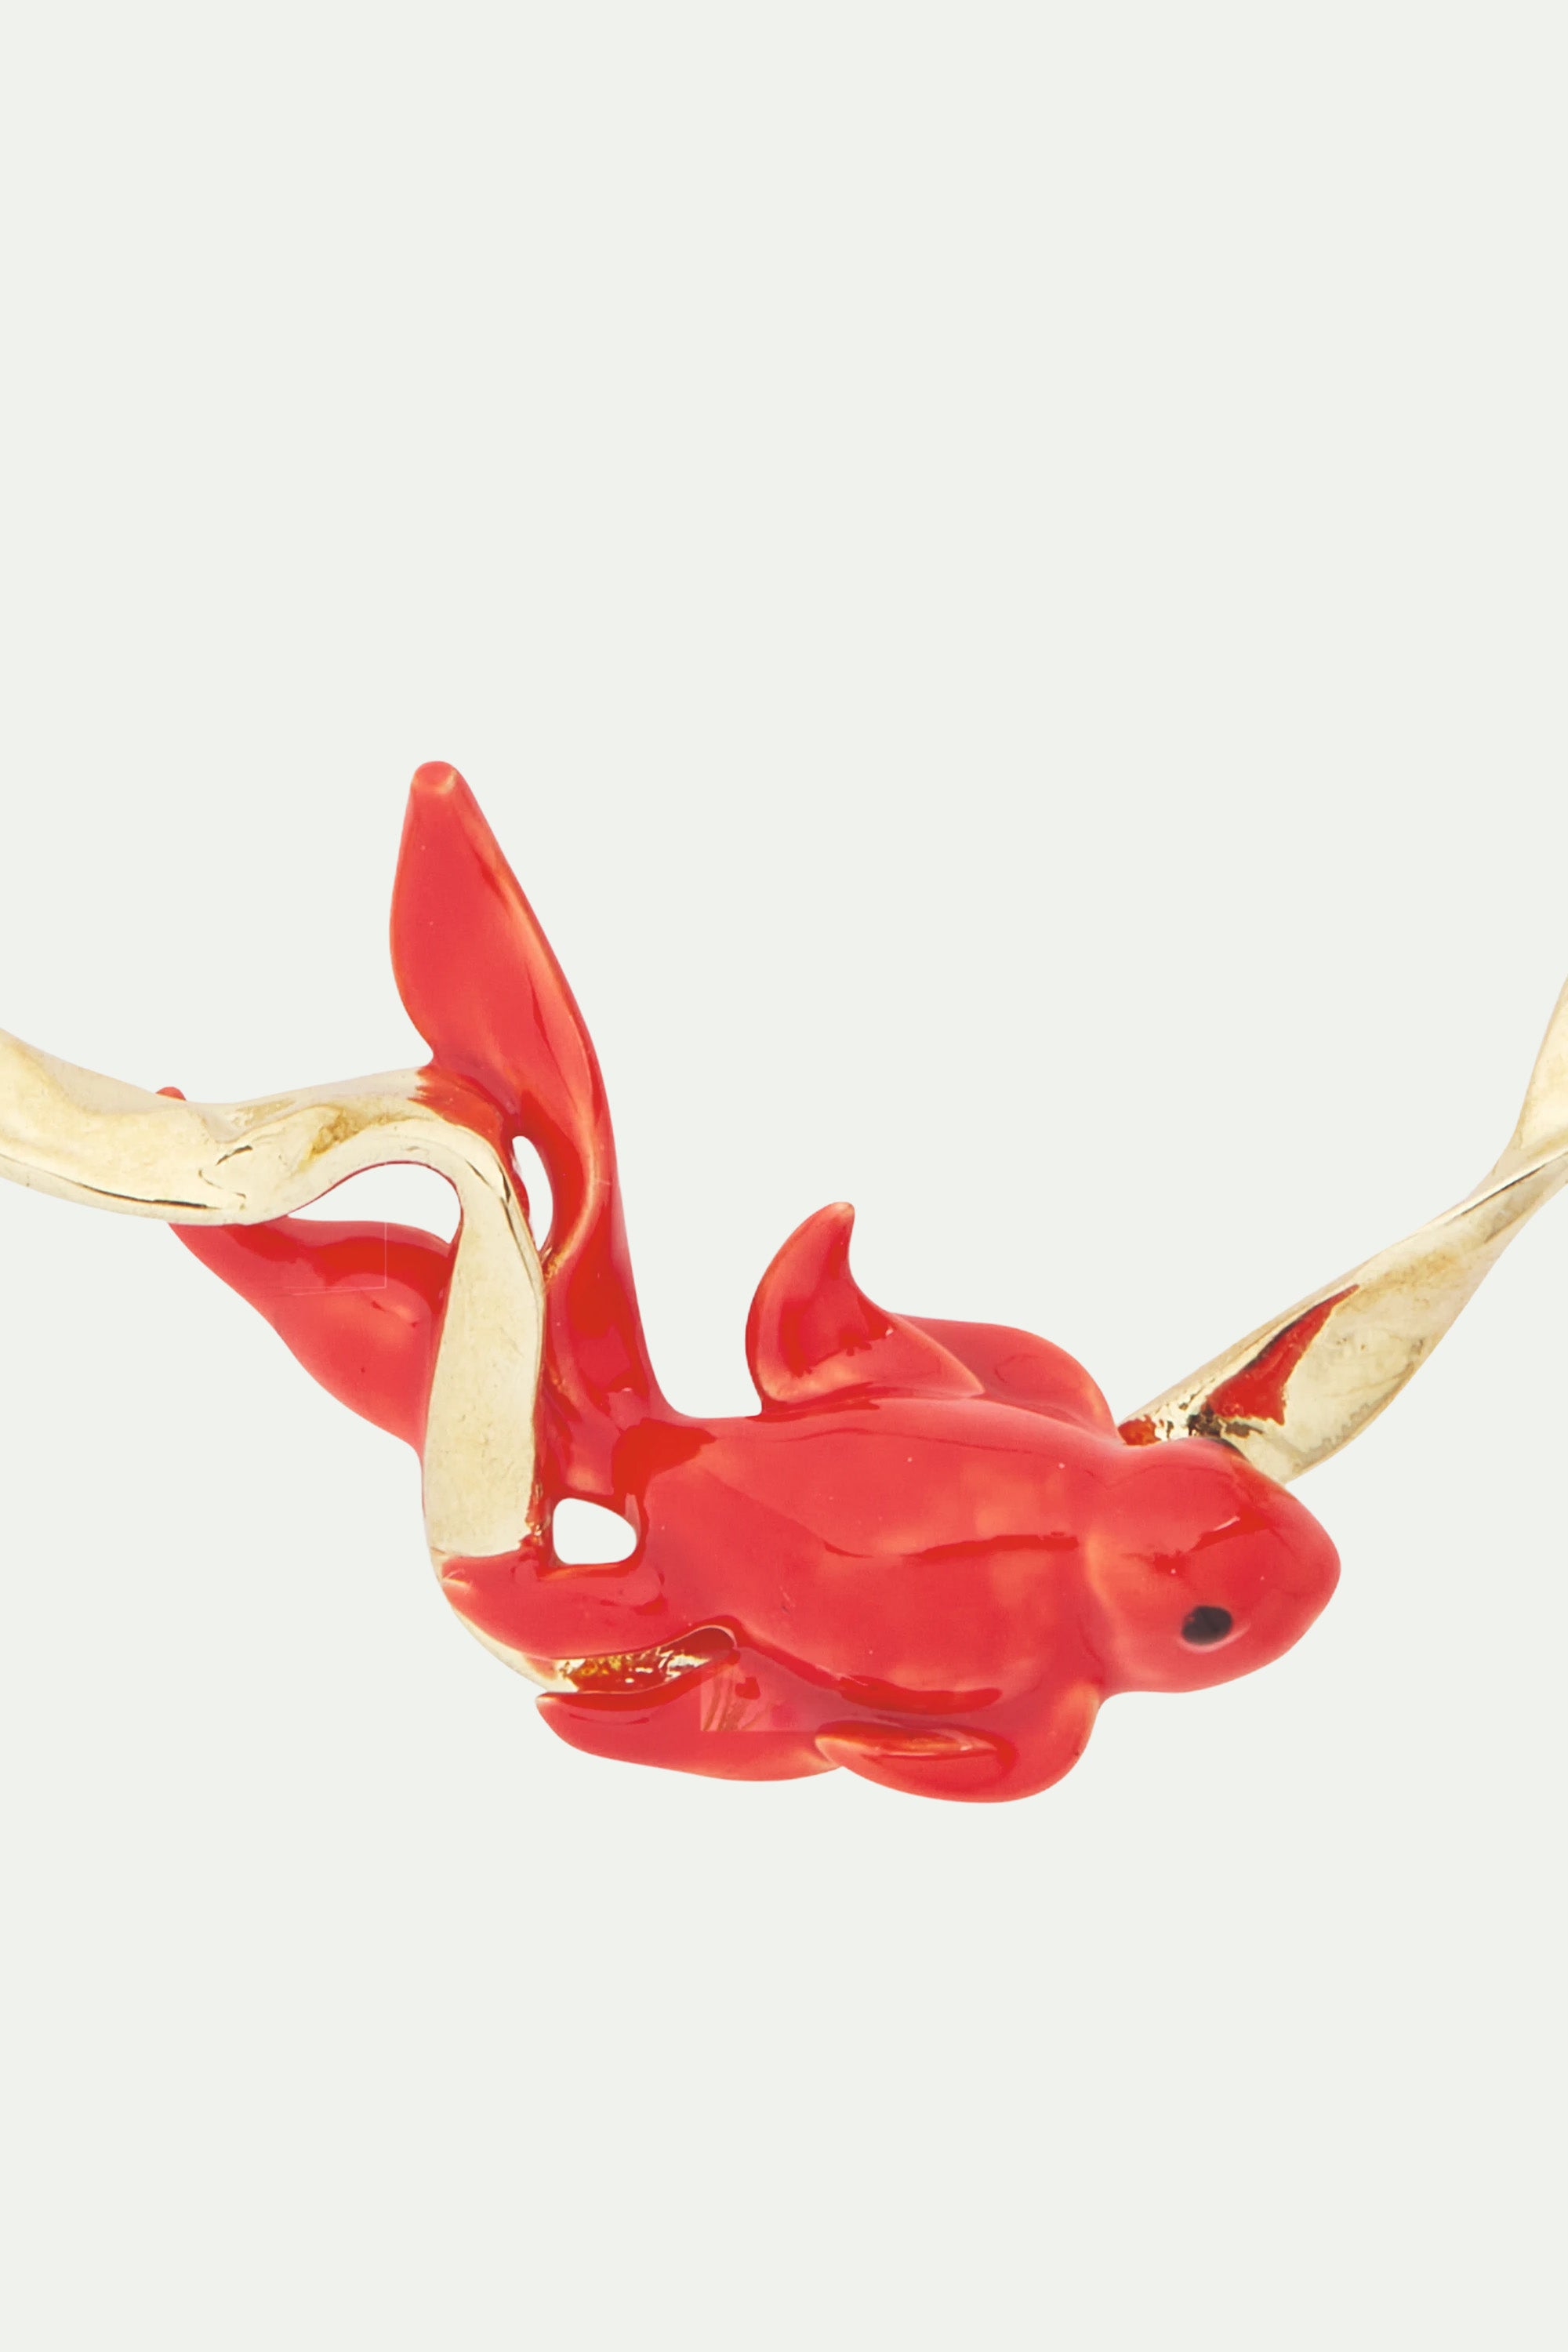 Koi fish pendant necklace